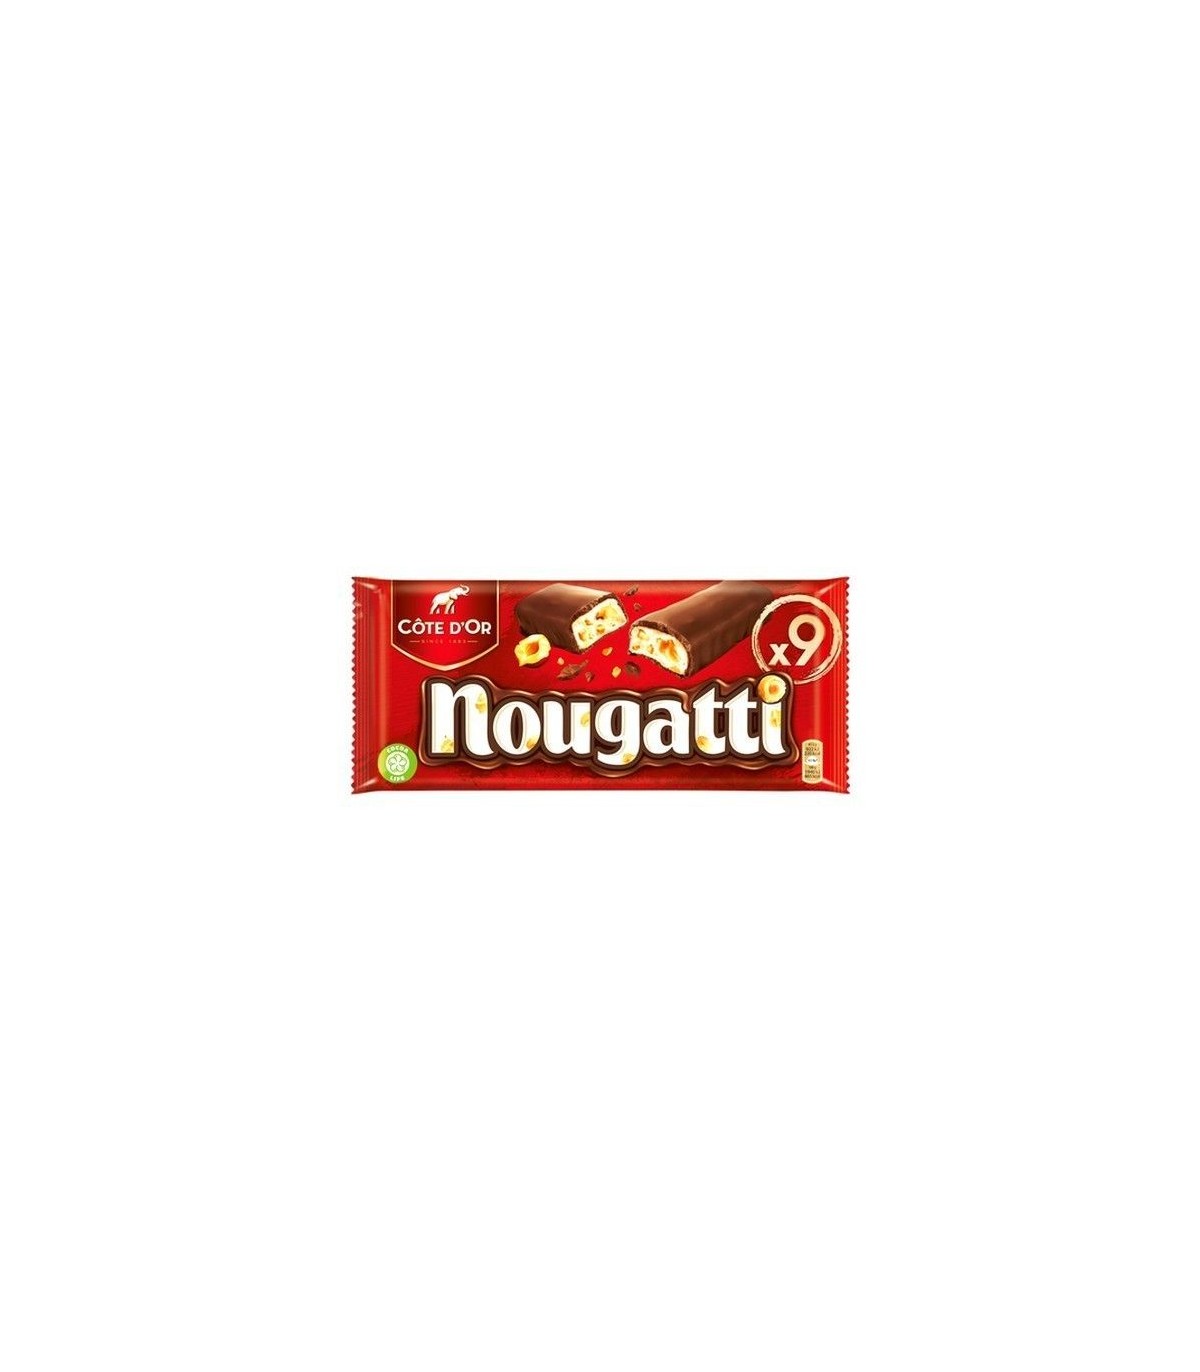 Cote d'Or Nougatti milk chocolate 9x 30 gr CHOCKIES